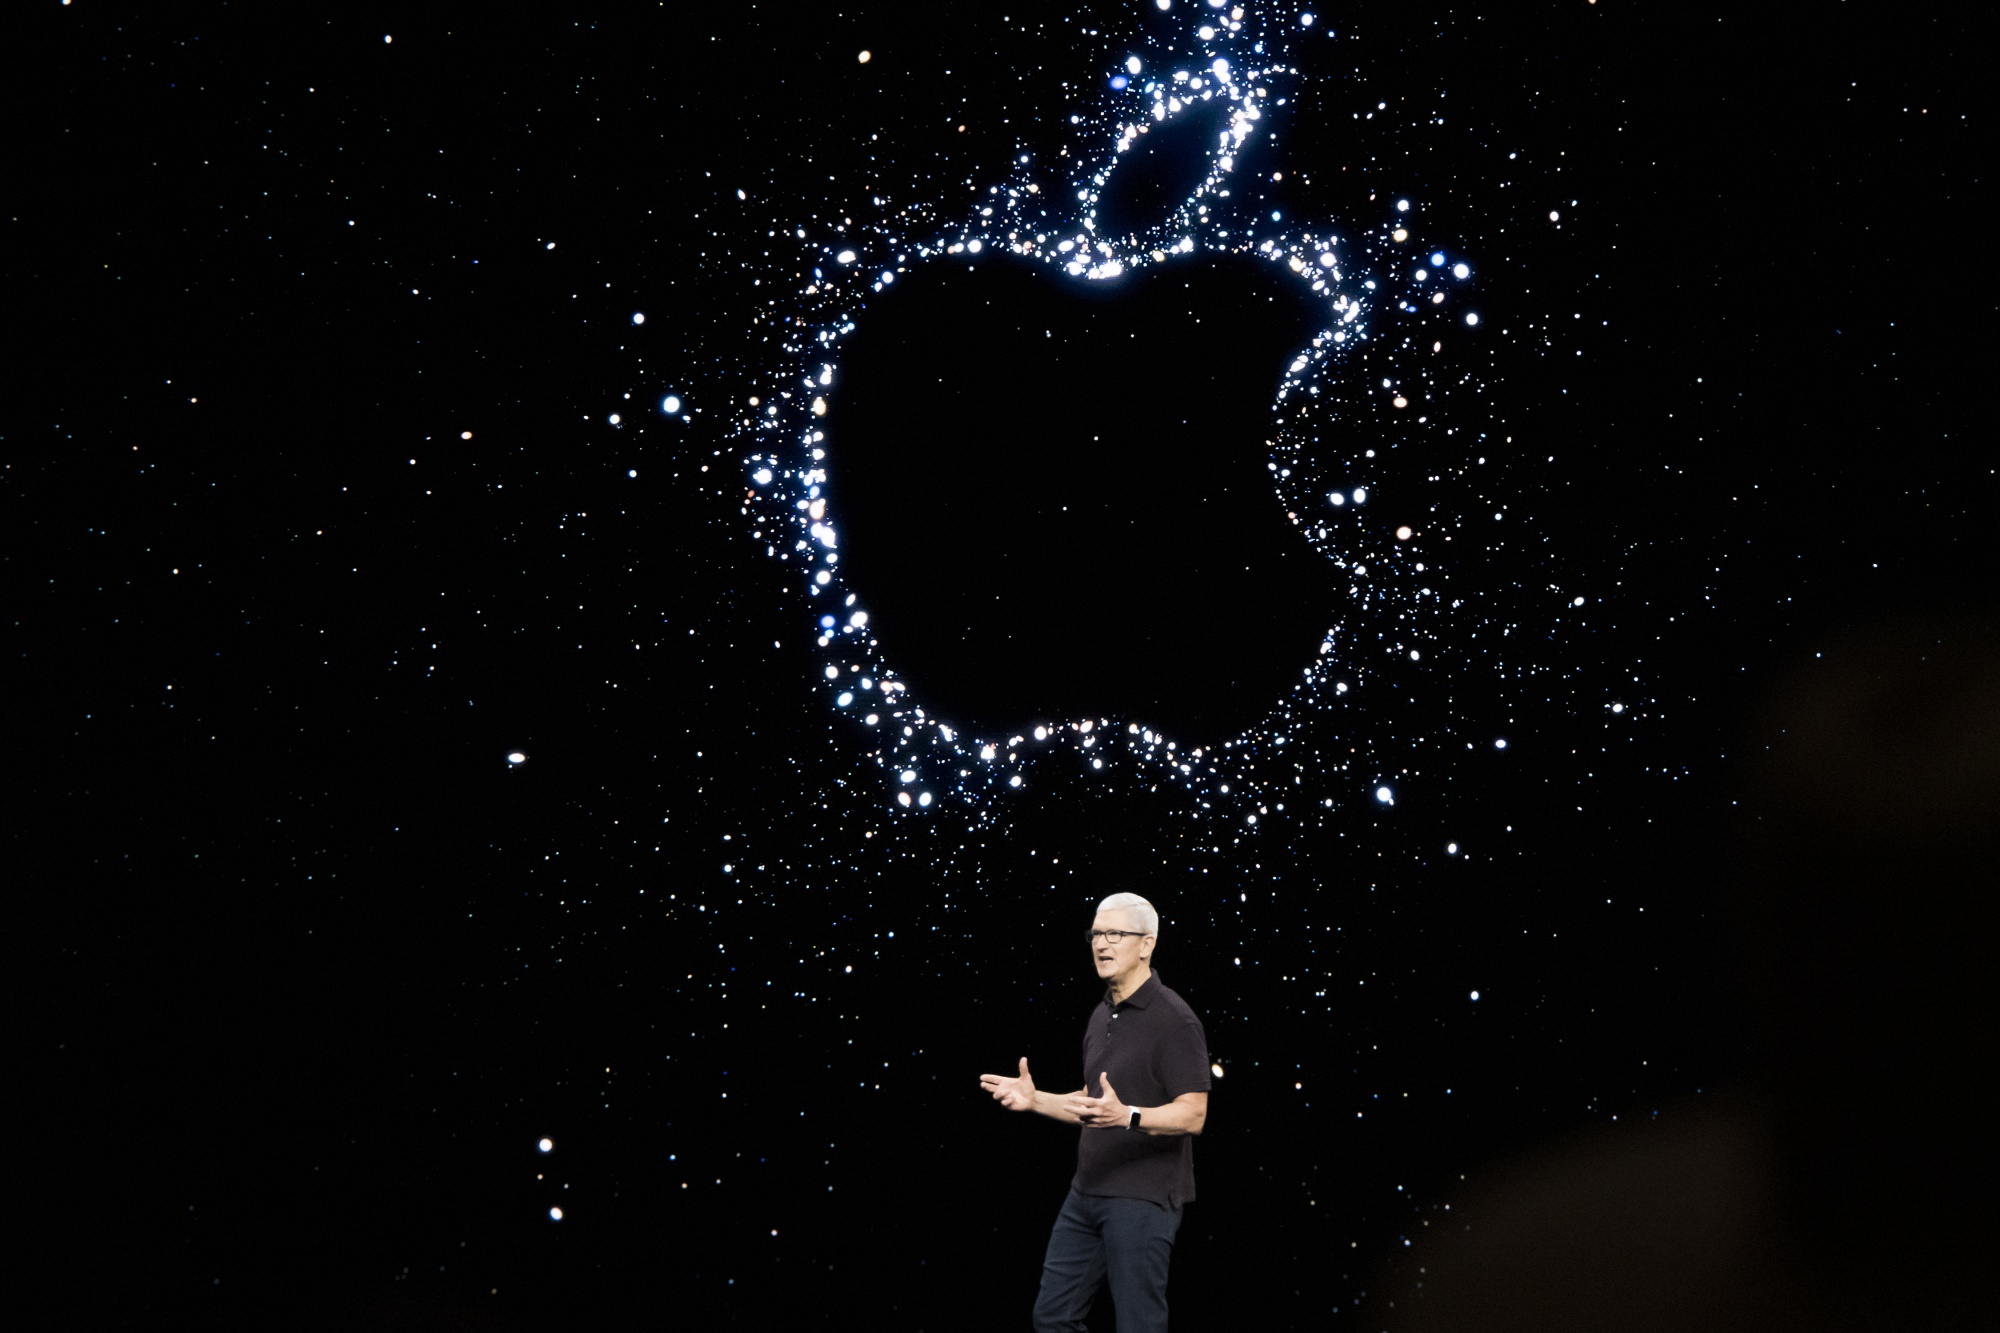 When Is Apple (AAPL) Releasing New Mac Pro, 15-inch MacBook Air, New iMac,  M3? - Bloomberg